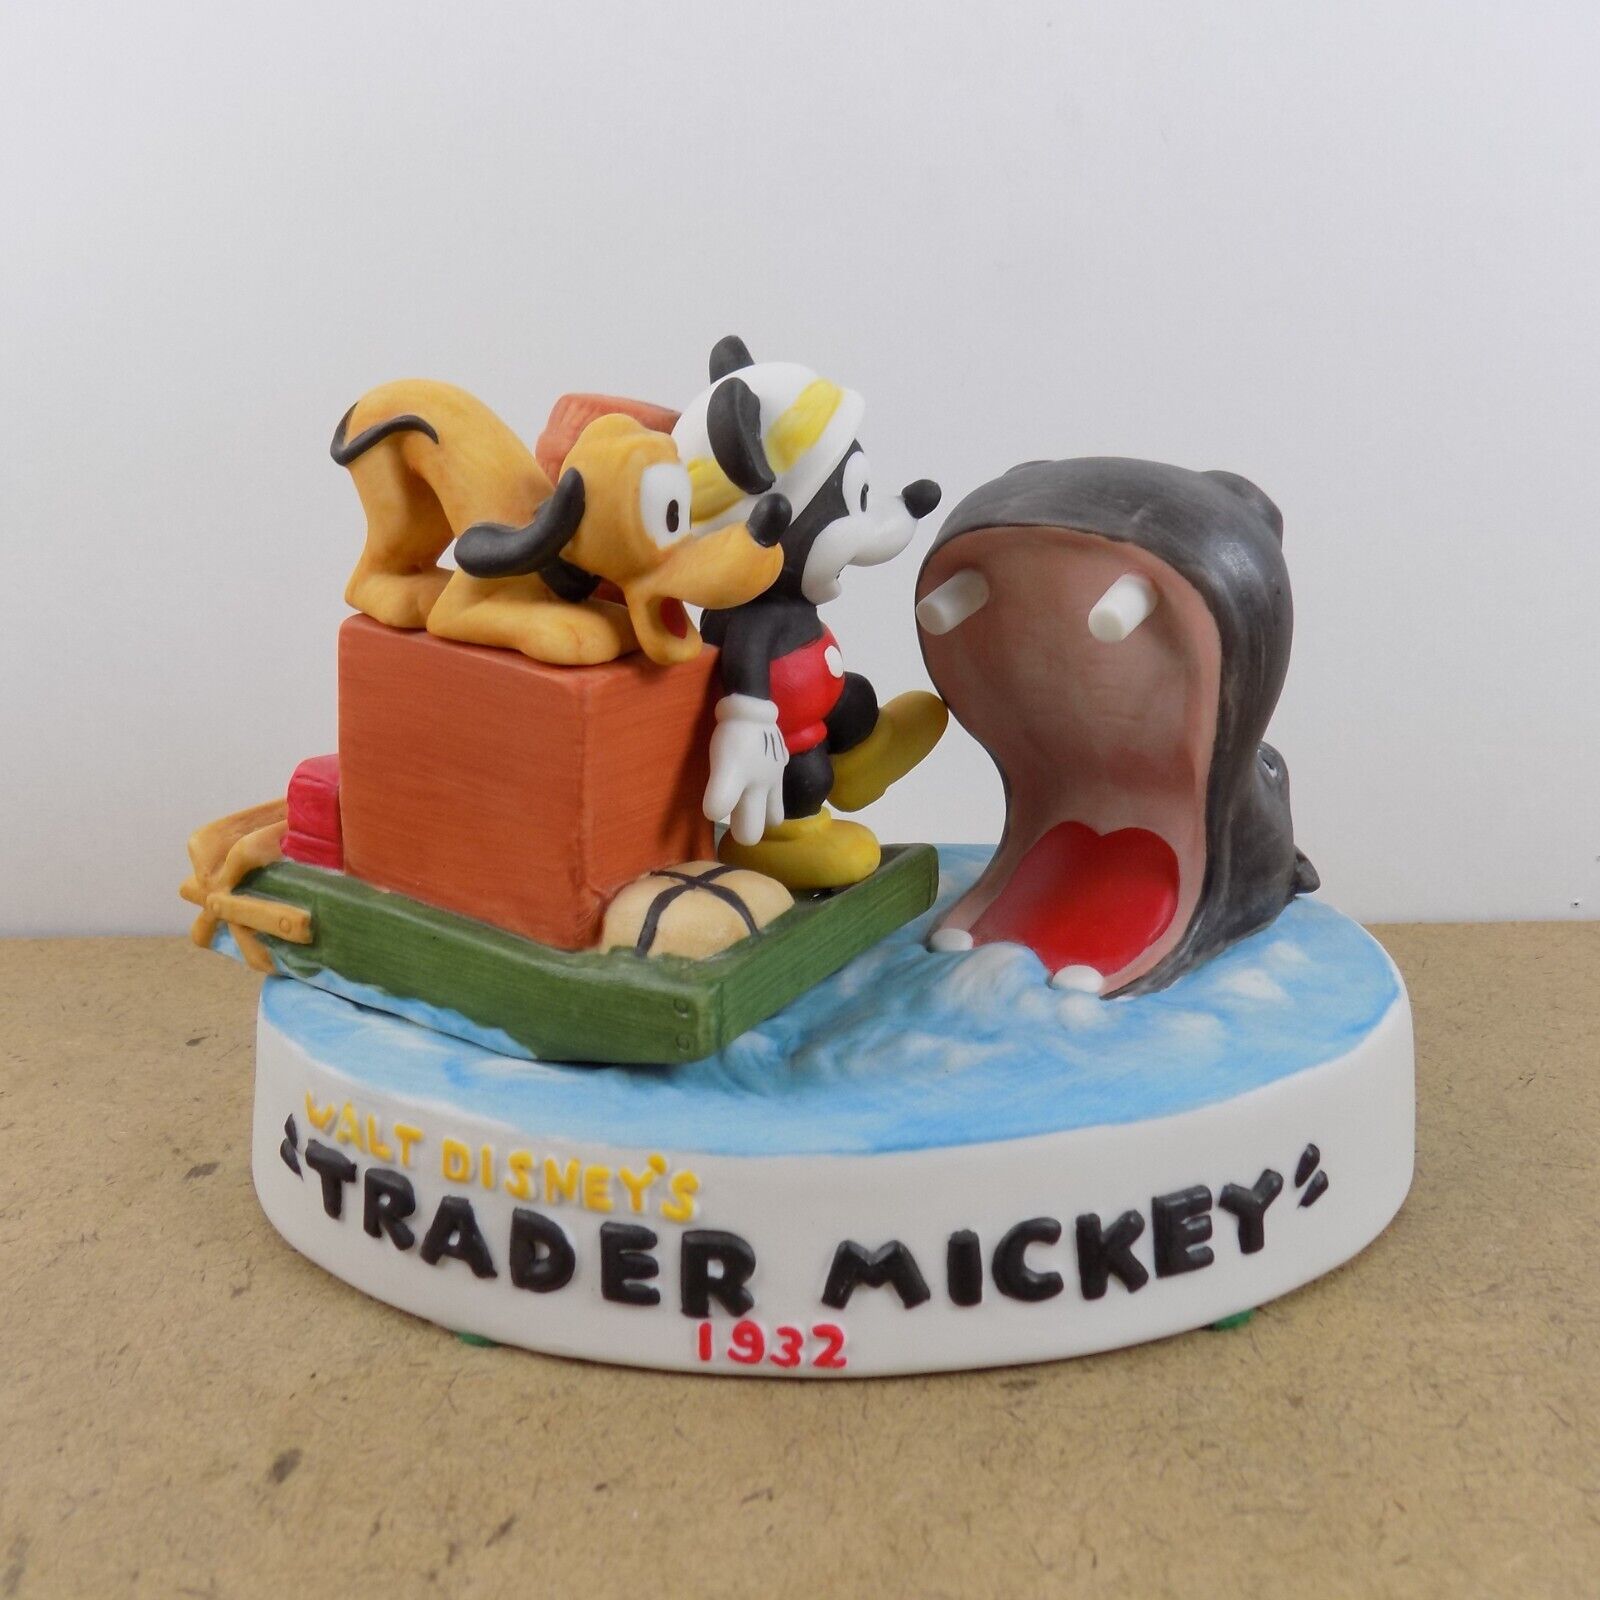 Disney Trader Mickey 1932 Figurine Mickey Pluto Limited Edition Cartoon Classics